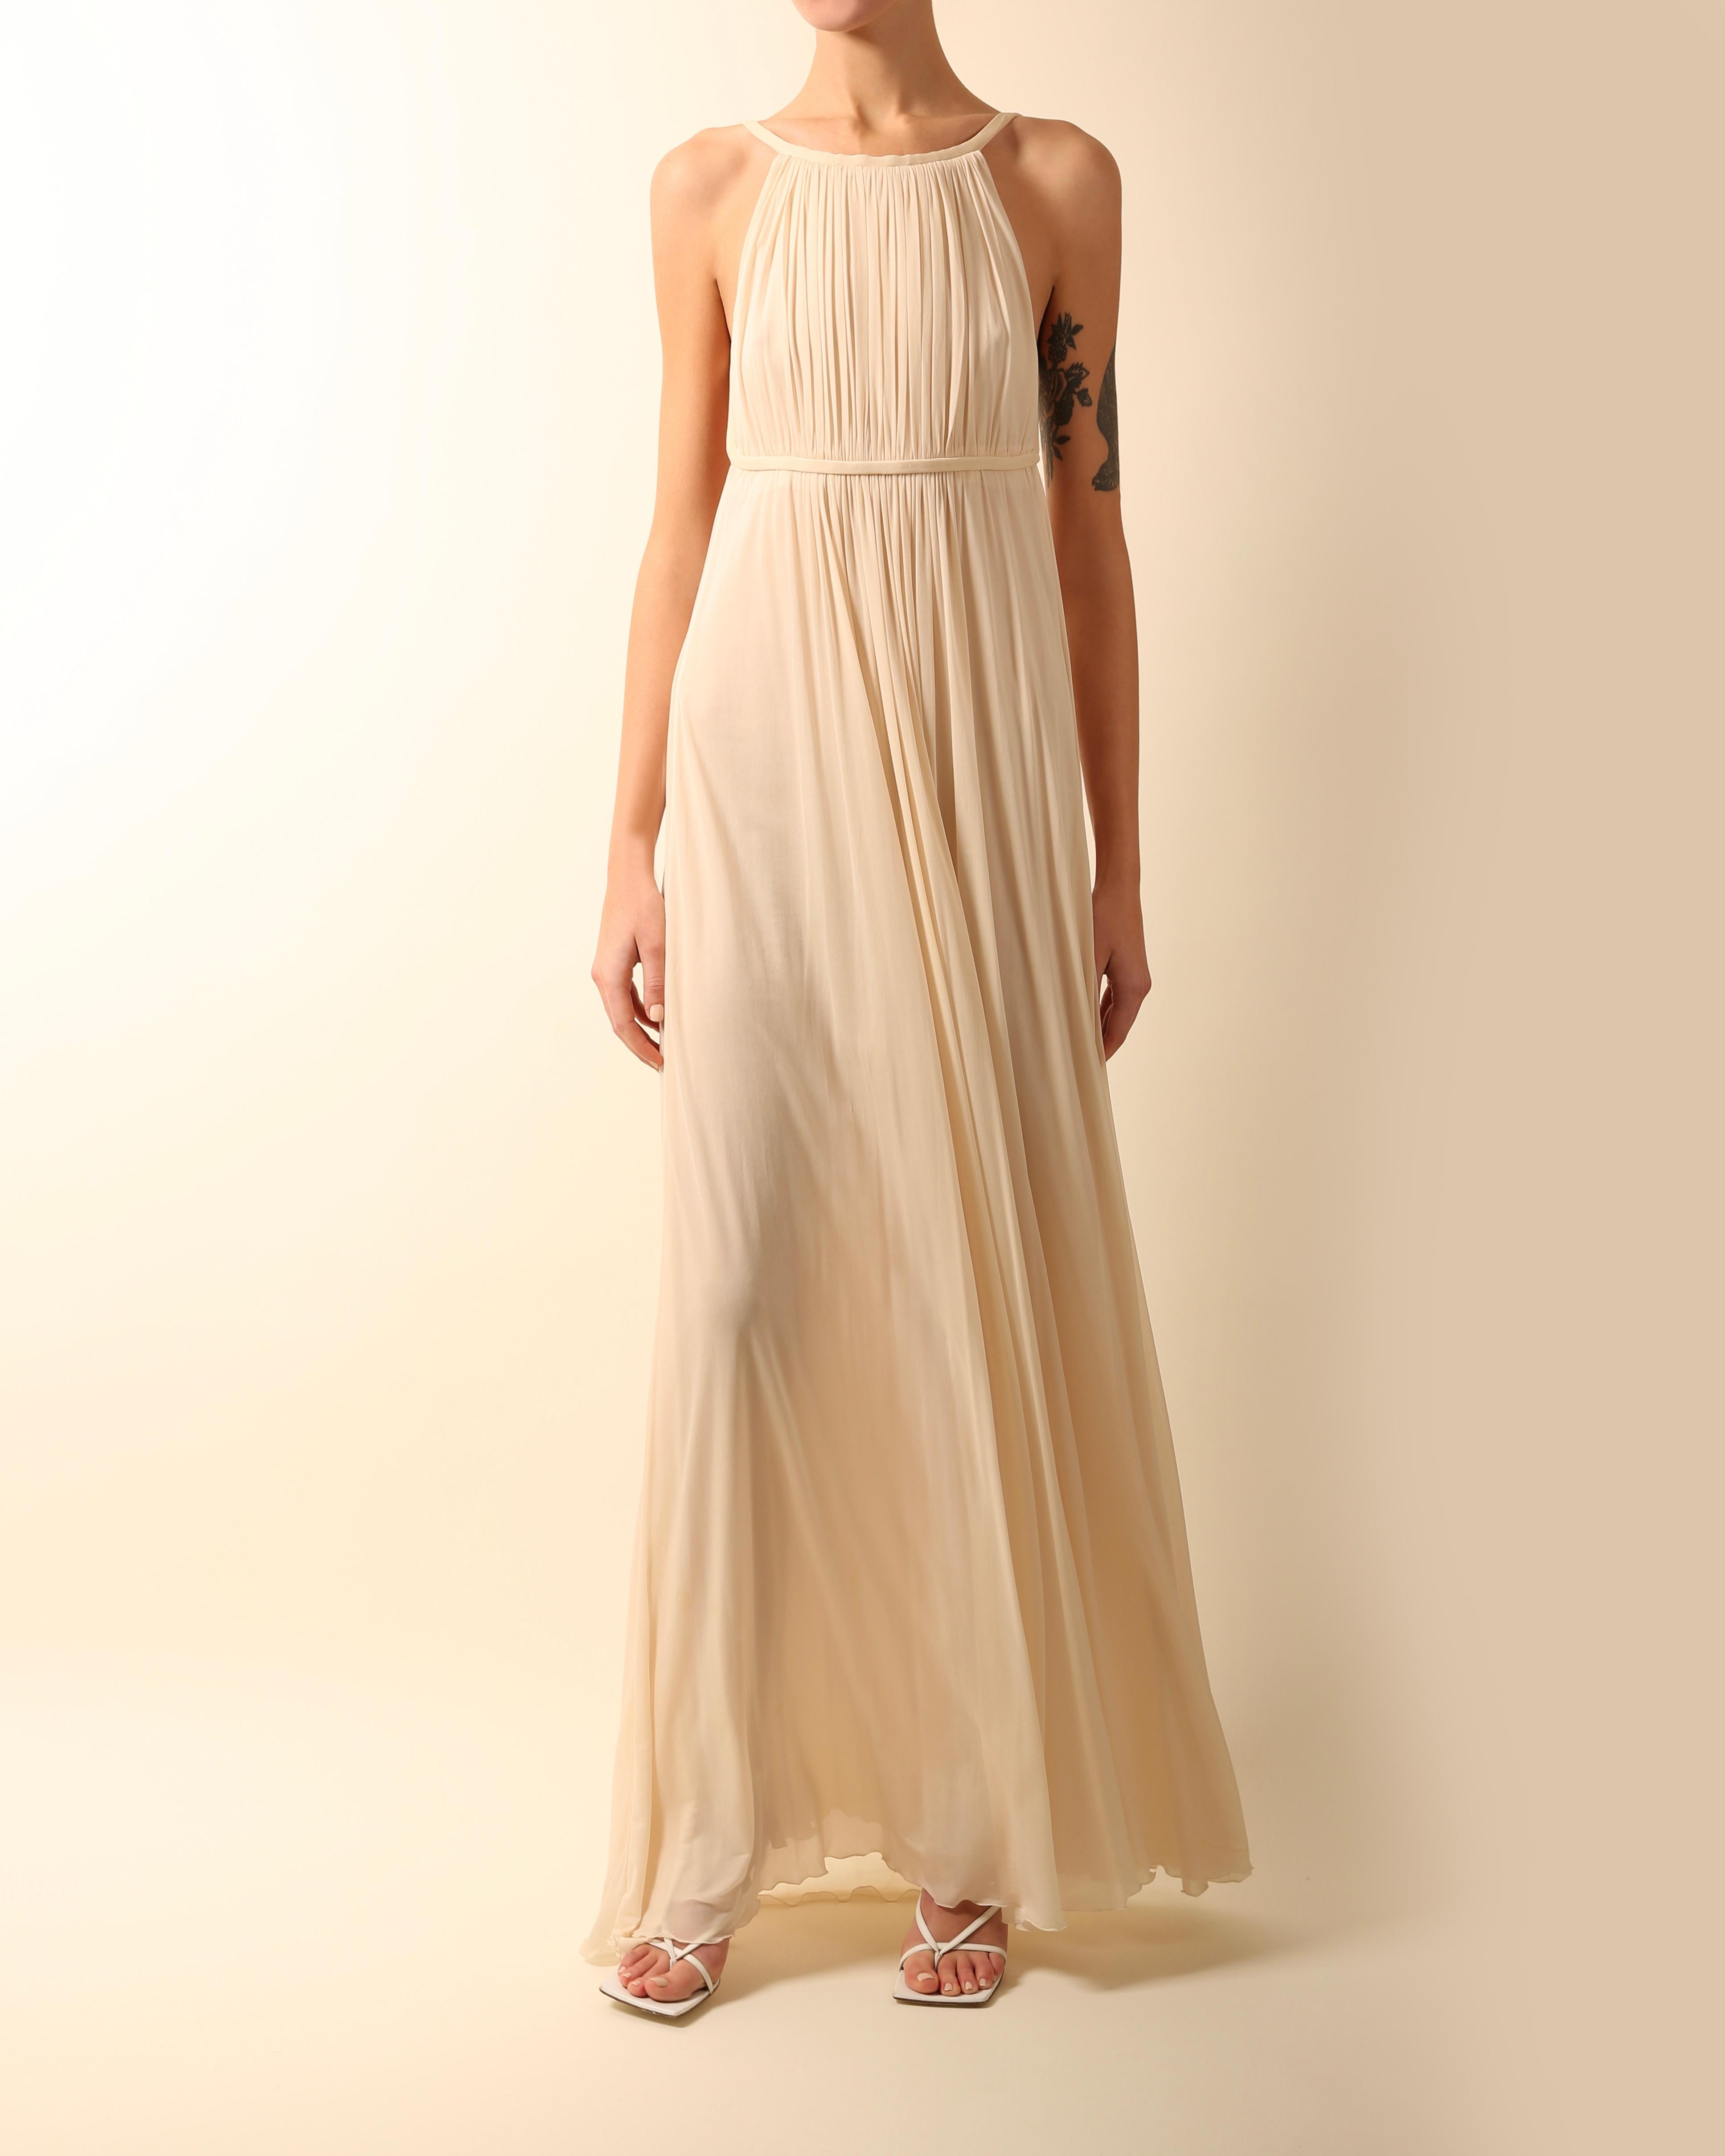 Orange Halston 09 ivory cream plisse grecian style backless wedding maxi dress gown 42 For Sale